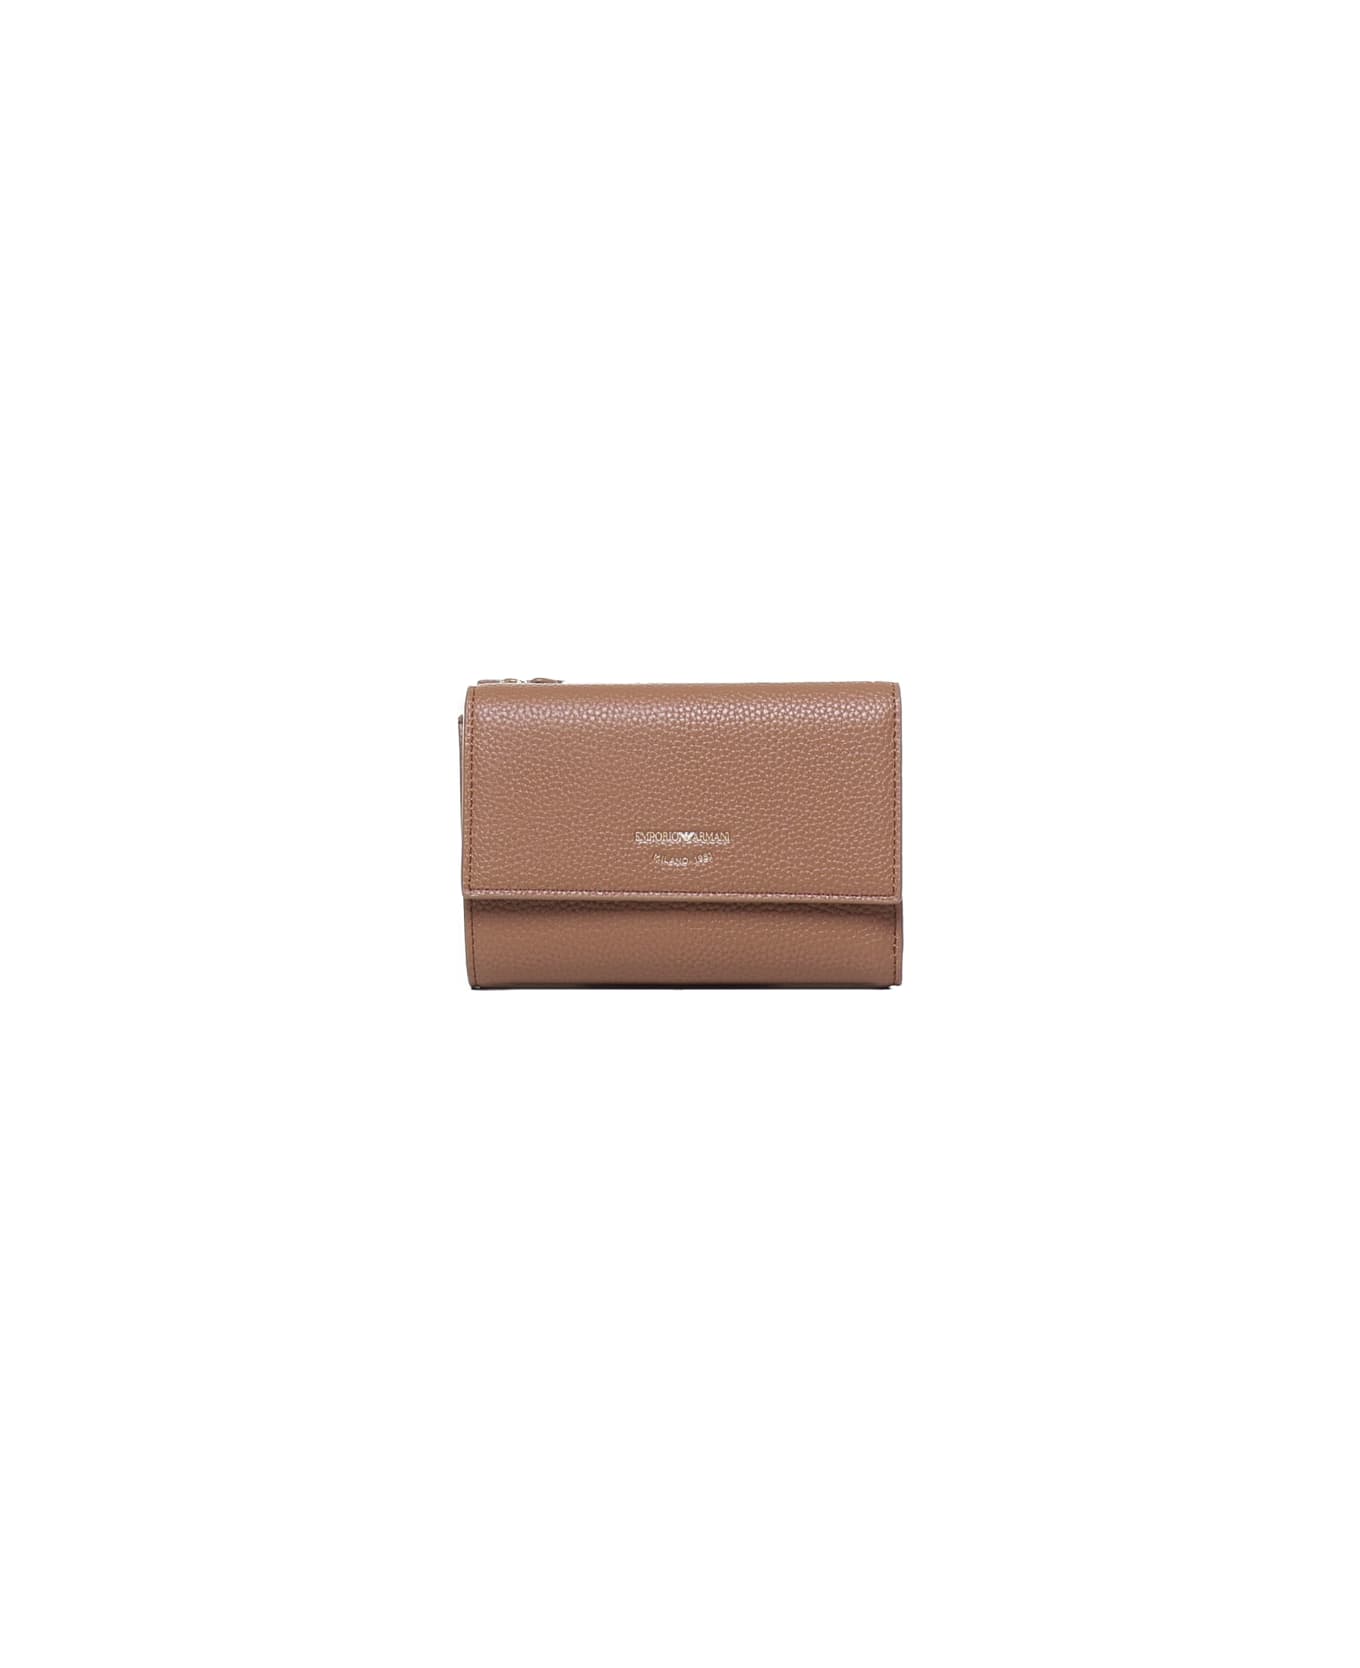 Giorgio Armani Wallet With Card Compartment And Magnetic Closure Giorgio Armani - Wood 財布